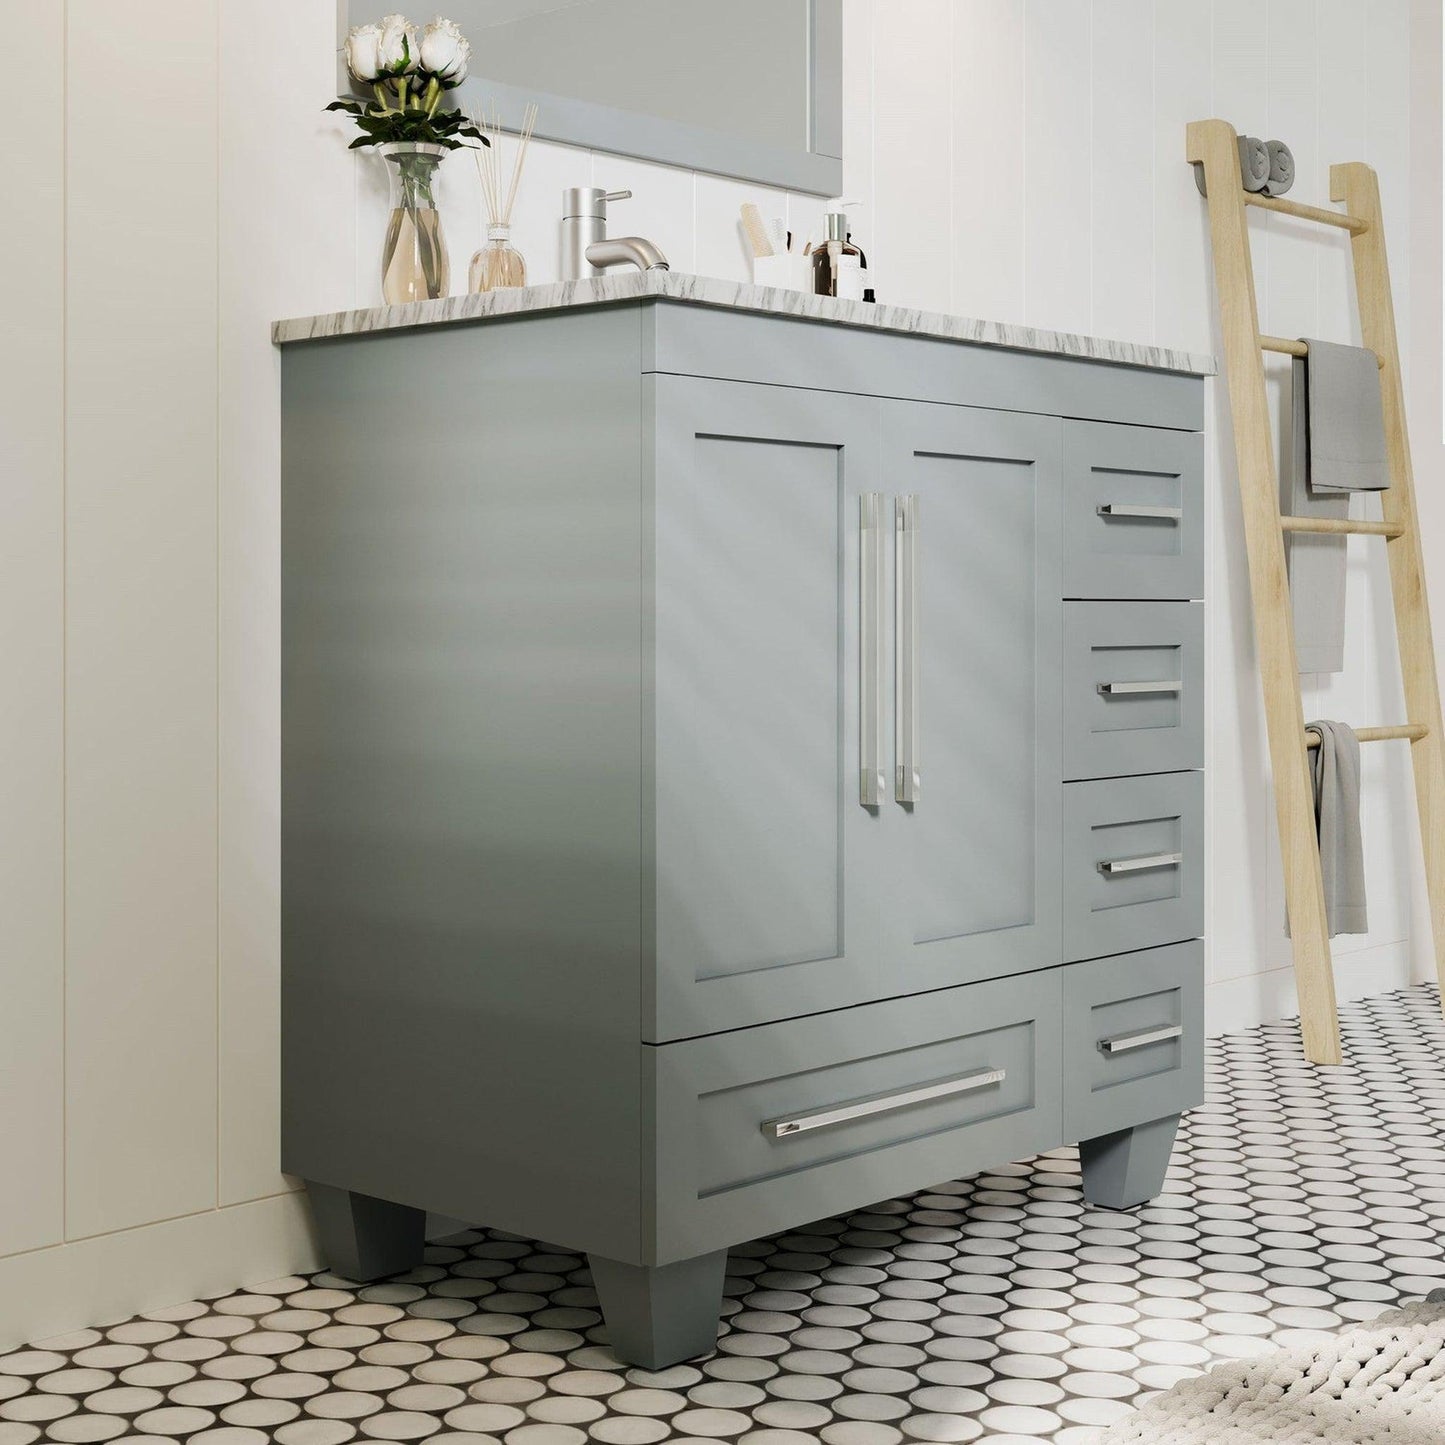 Eviva Loon 30" x 34" Gray Freestanding Bathroom Vanity With Carrara Marble Countertop and Undermount Porcelain Sink